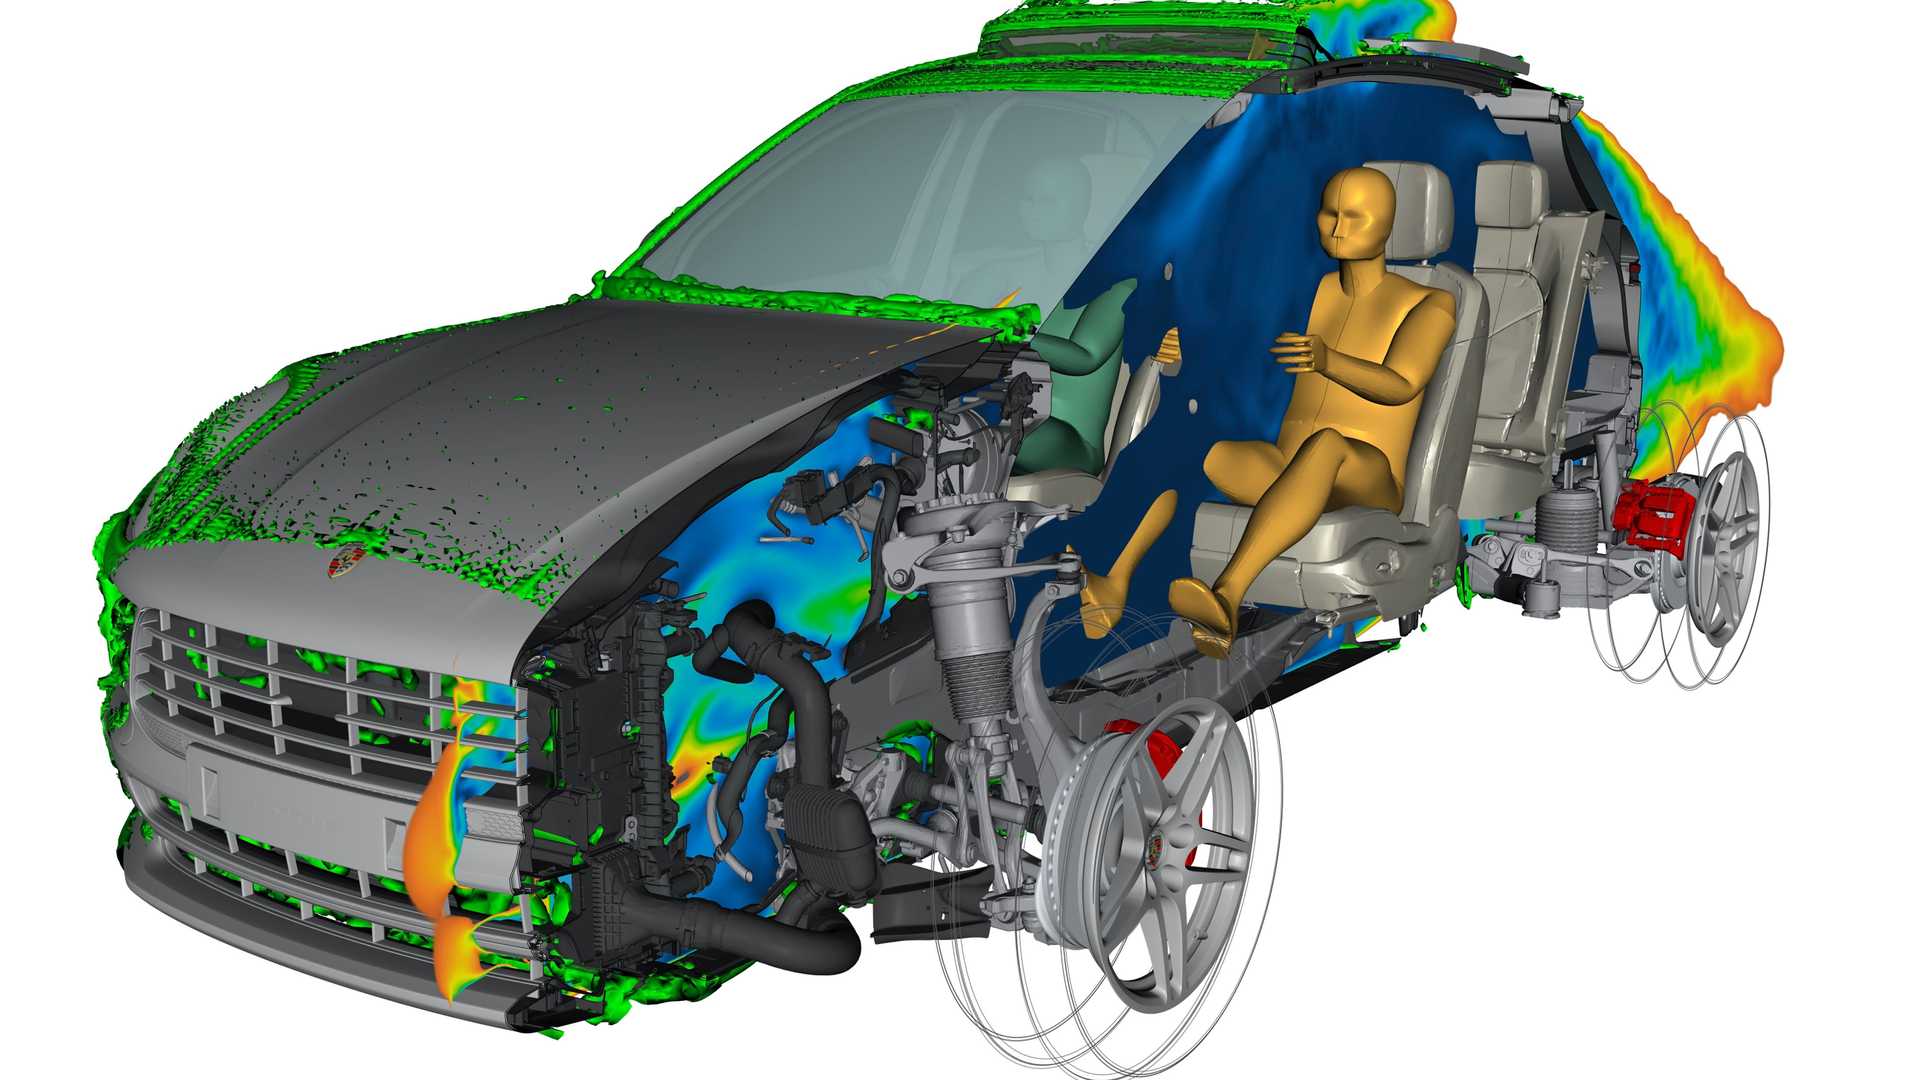 شبیه سازی پروتوتایپ کراس اور برقی پورشه ماکان / Porsche Macan EV crossover